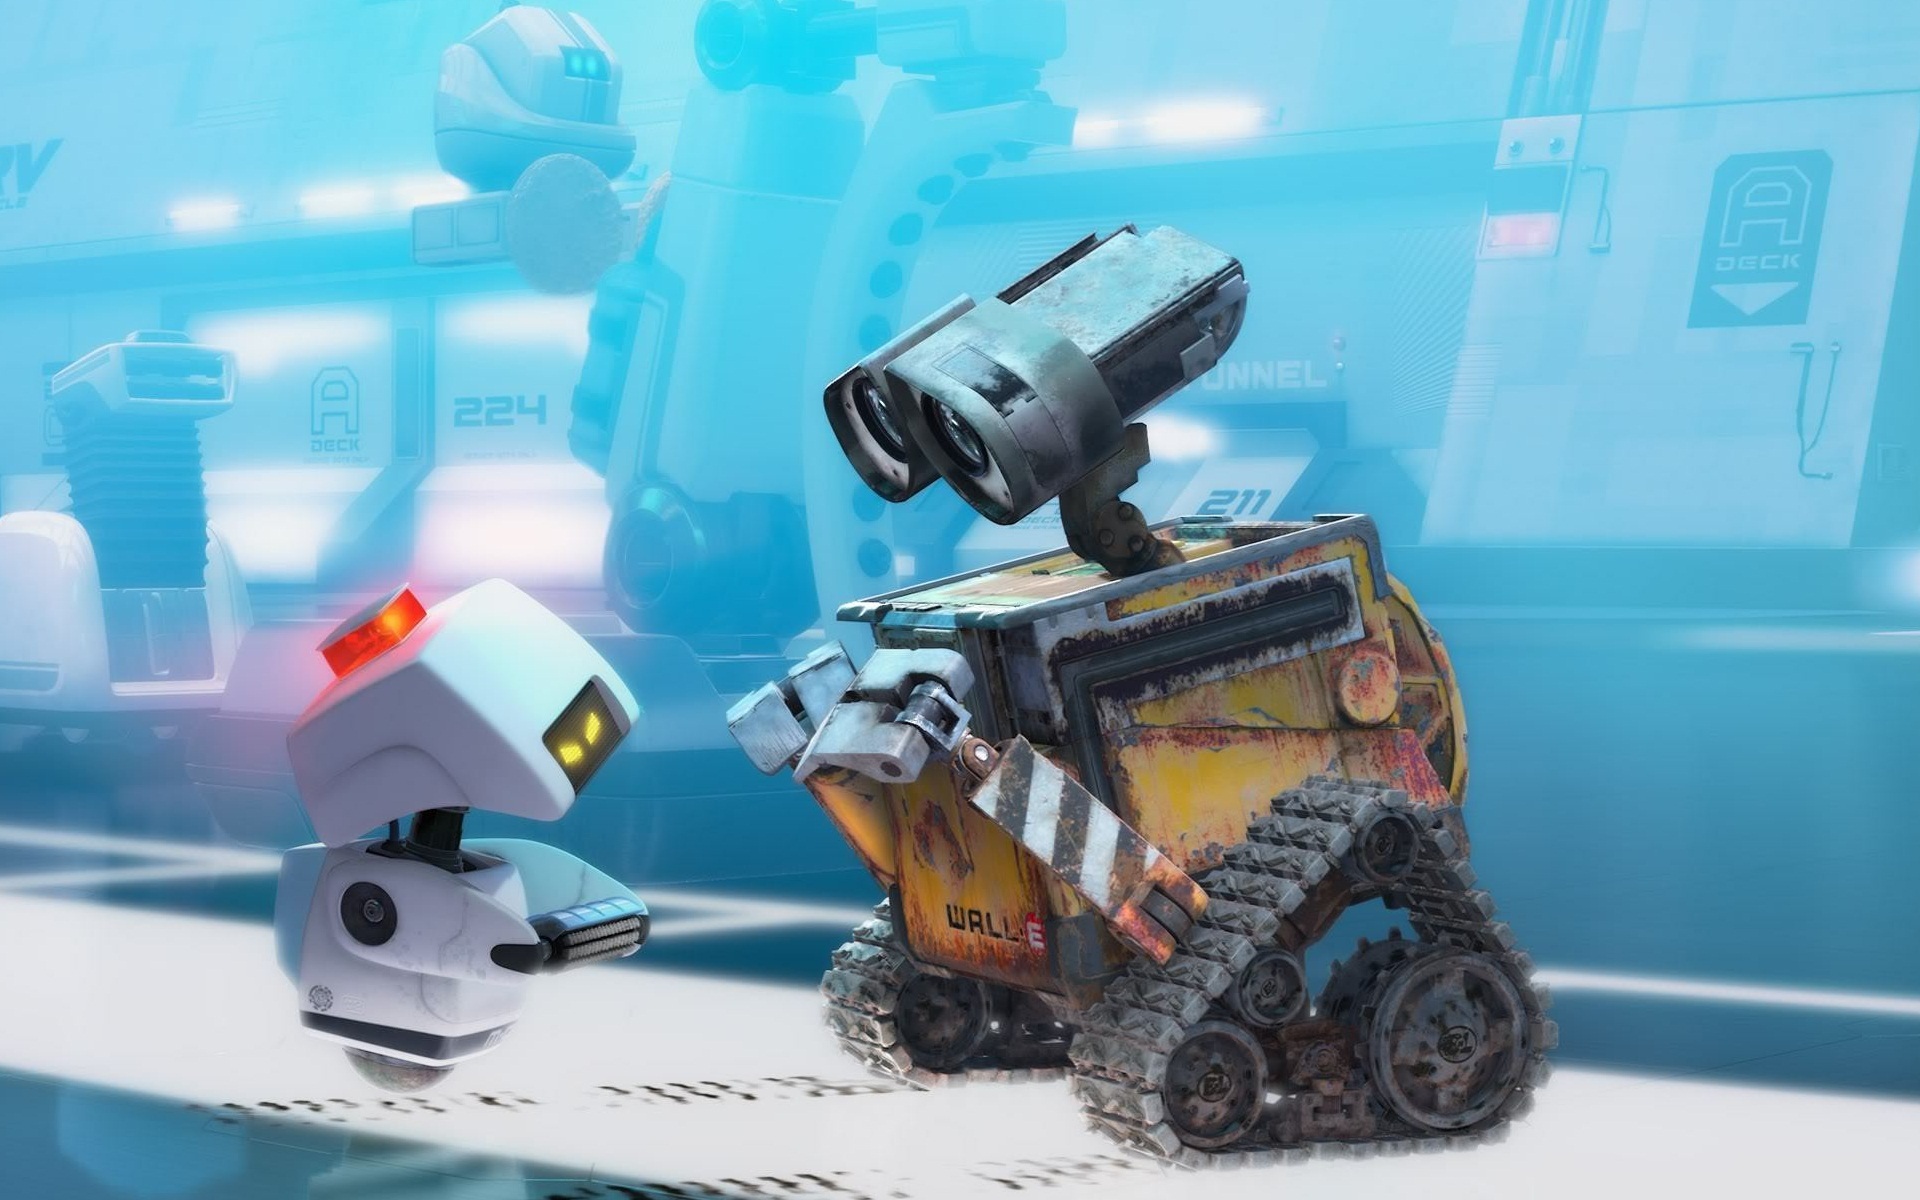 download wallpaper: Wall-E en schoonmaakrobot wallpaper